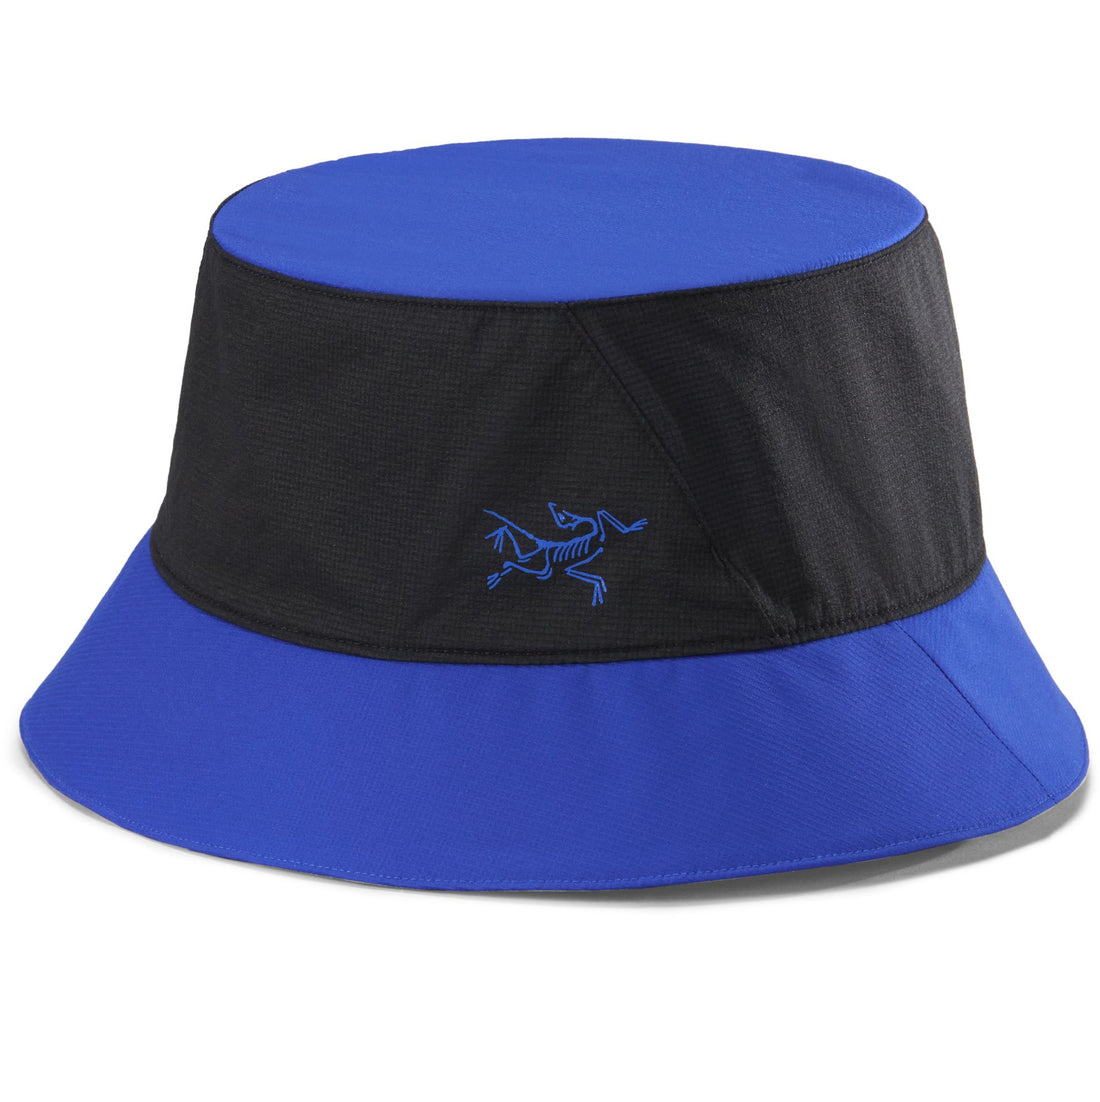 Aerios Bucket Hat - Vitality/Black